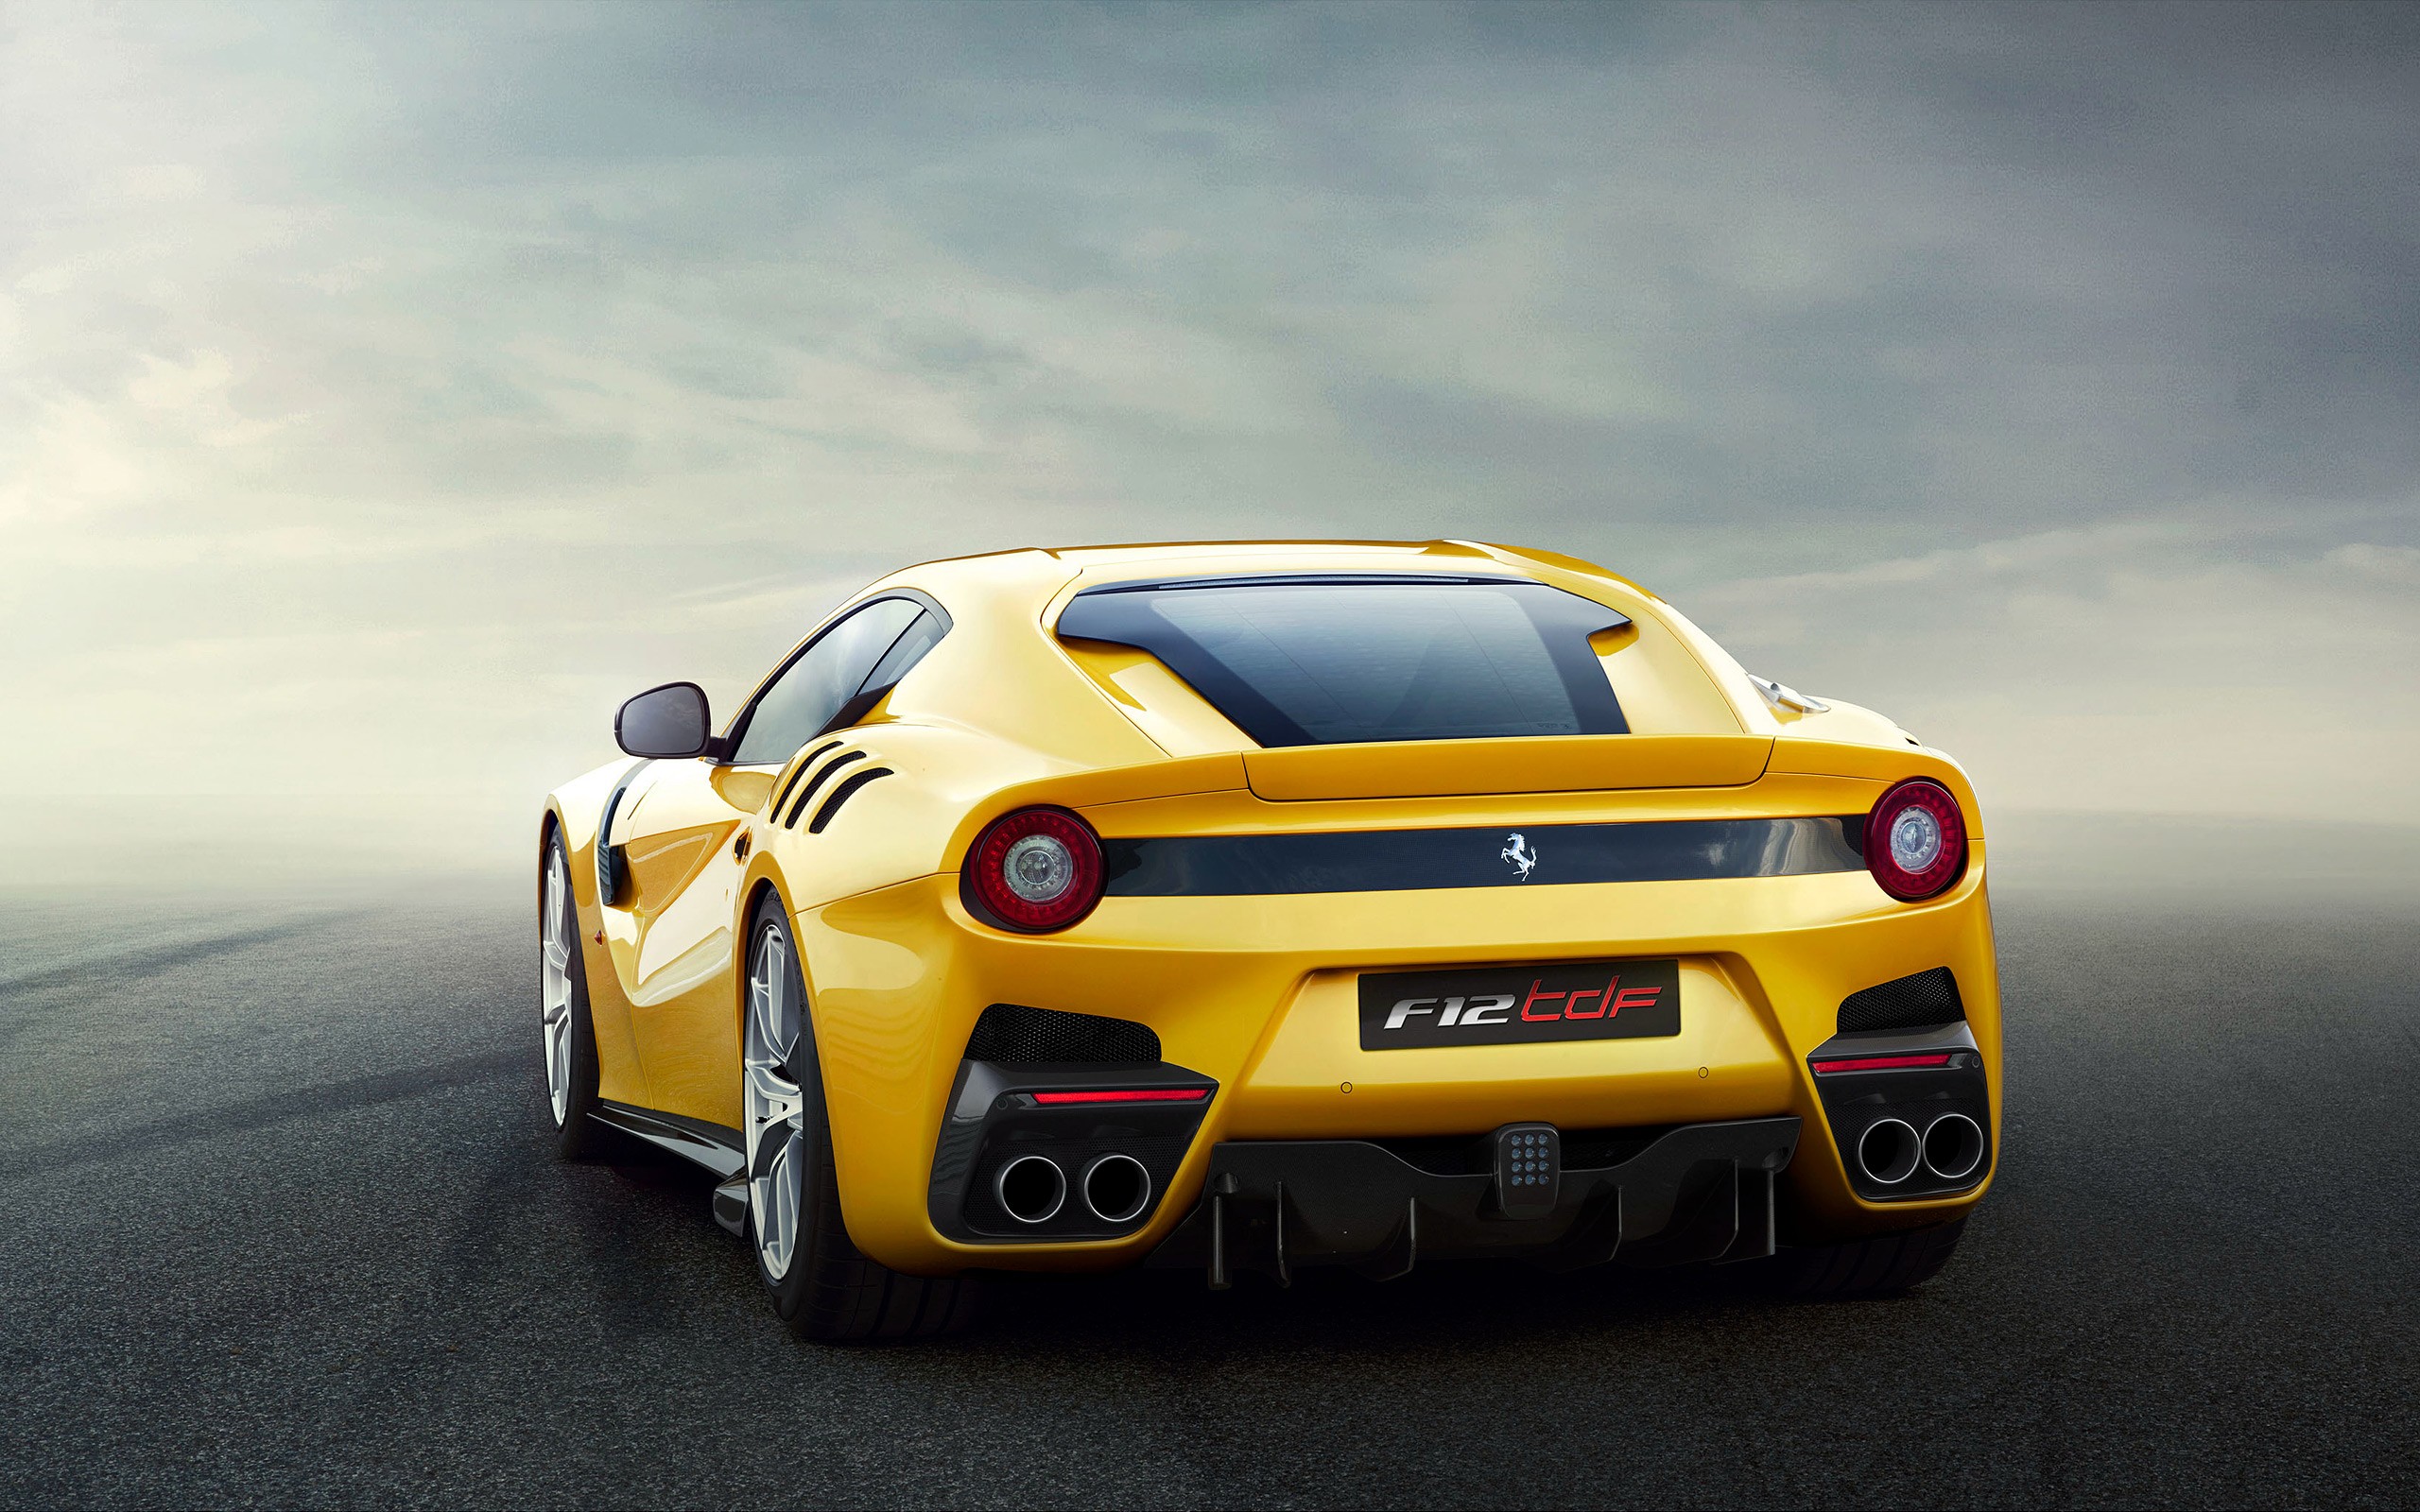 Ferrari F12 Tdf Car Wallpapers Hd Desktop And Mobile Backgrounds